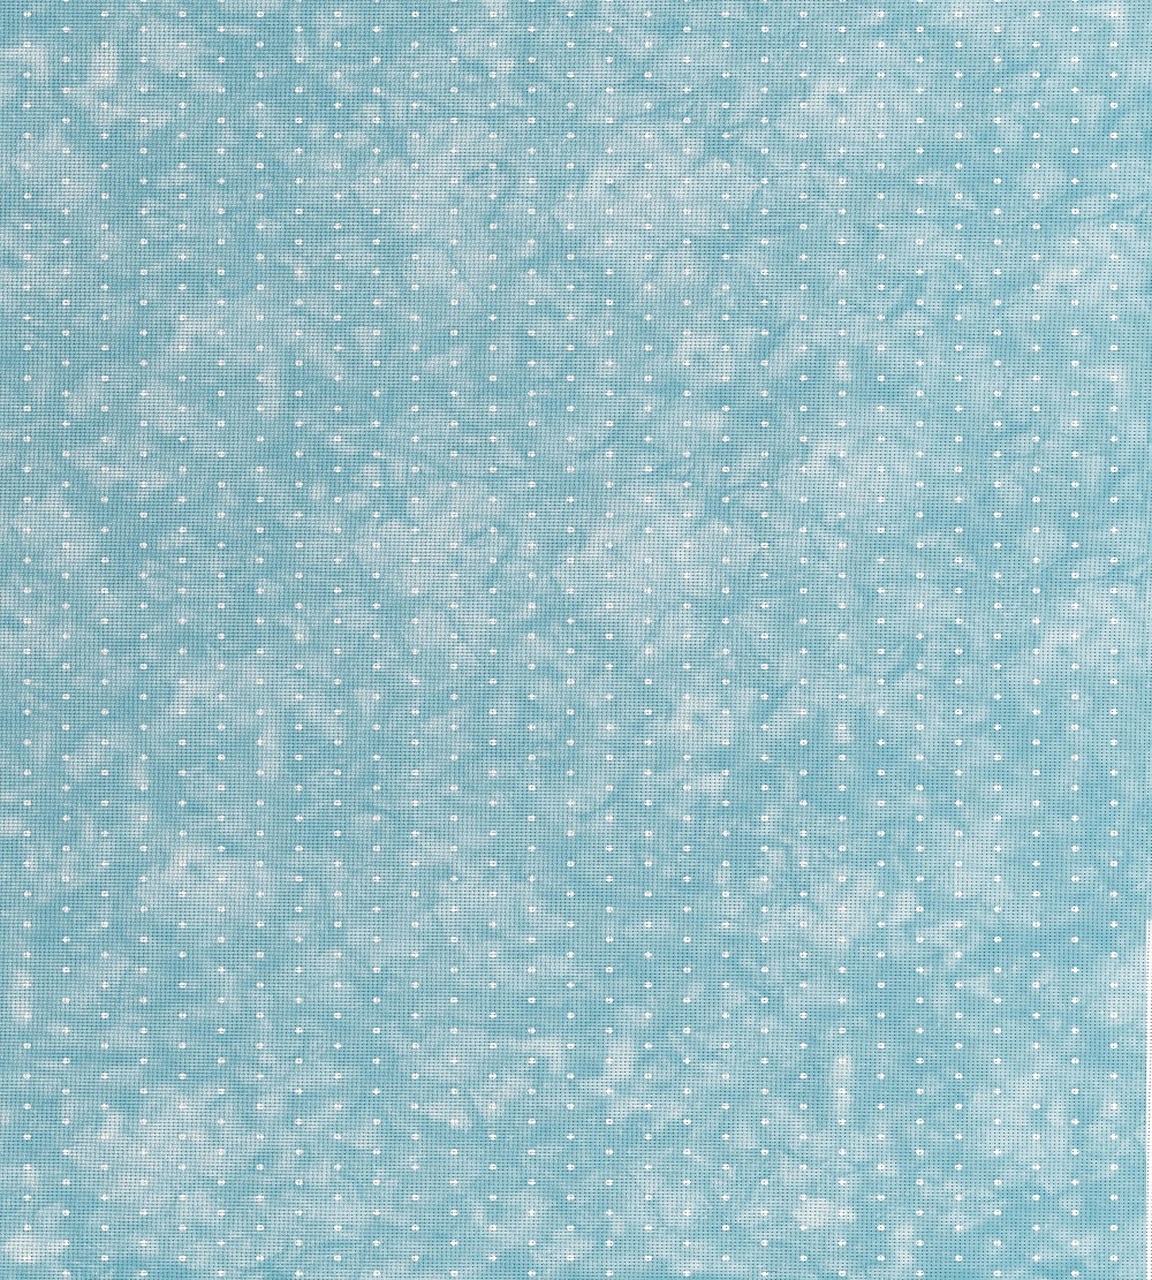 Aqua Dye Effect with Dots Patterned Cross Stitch Fabric